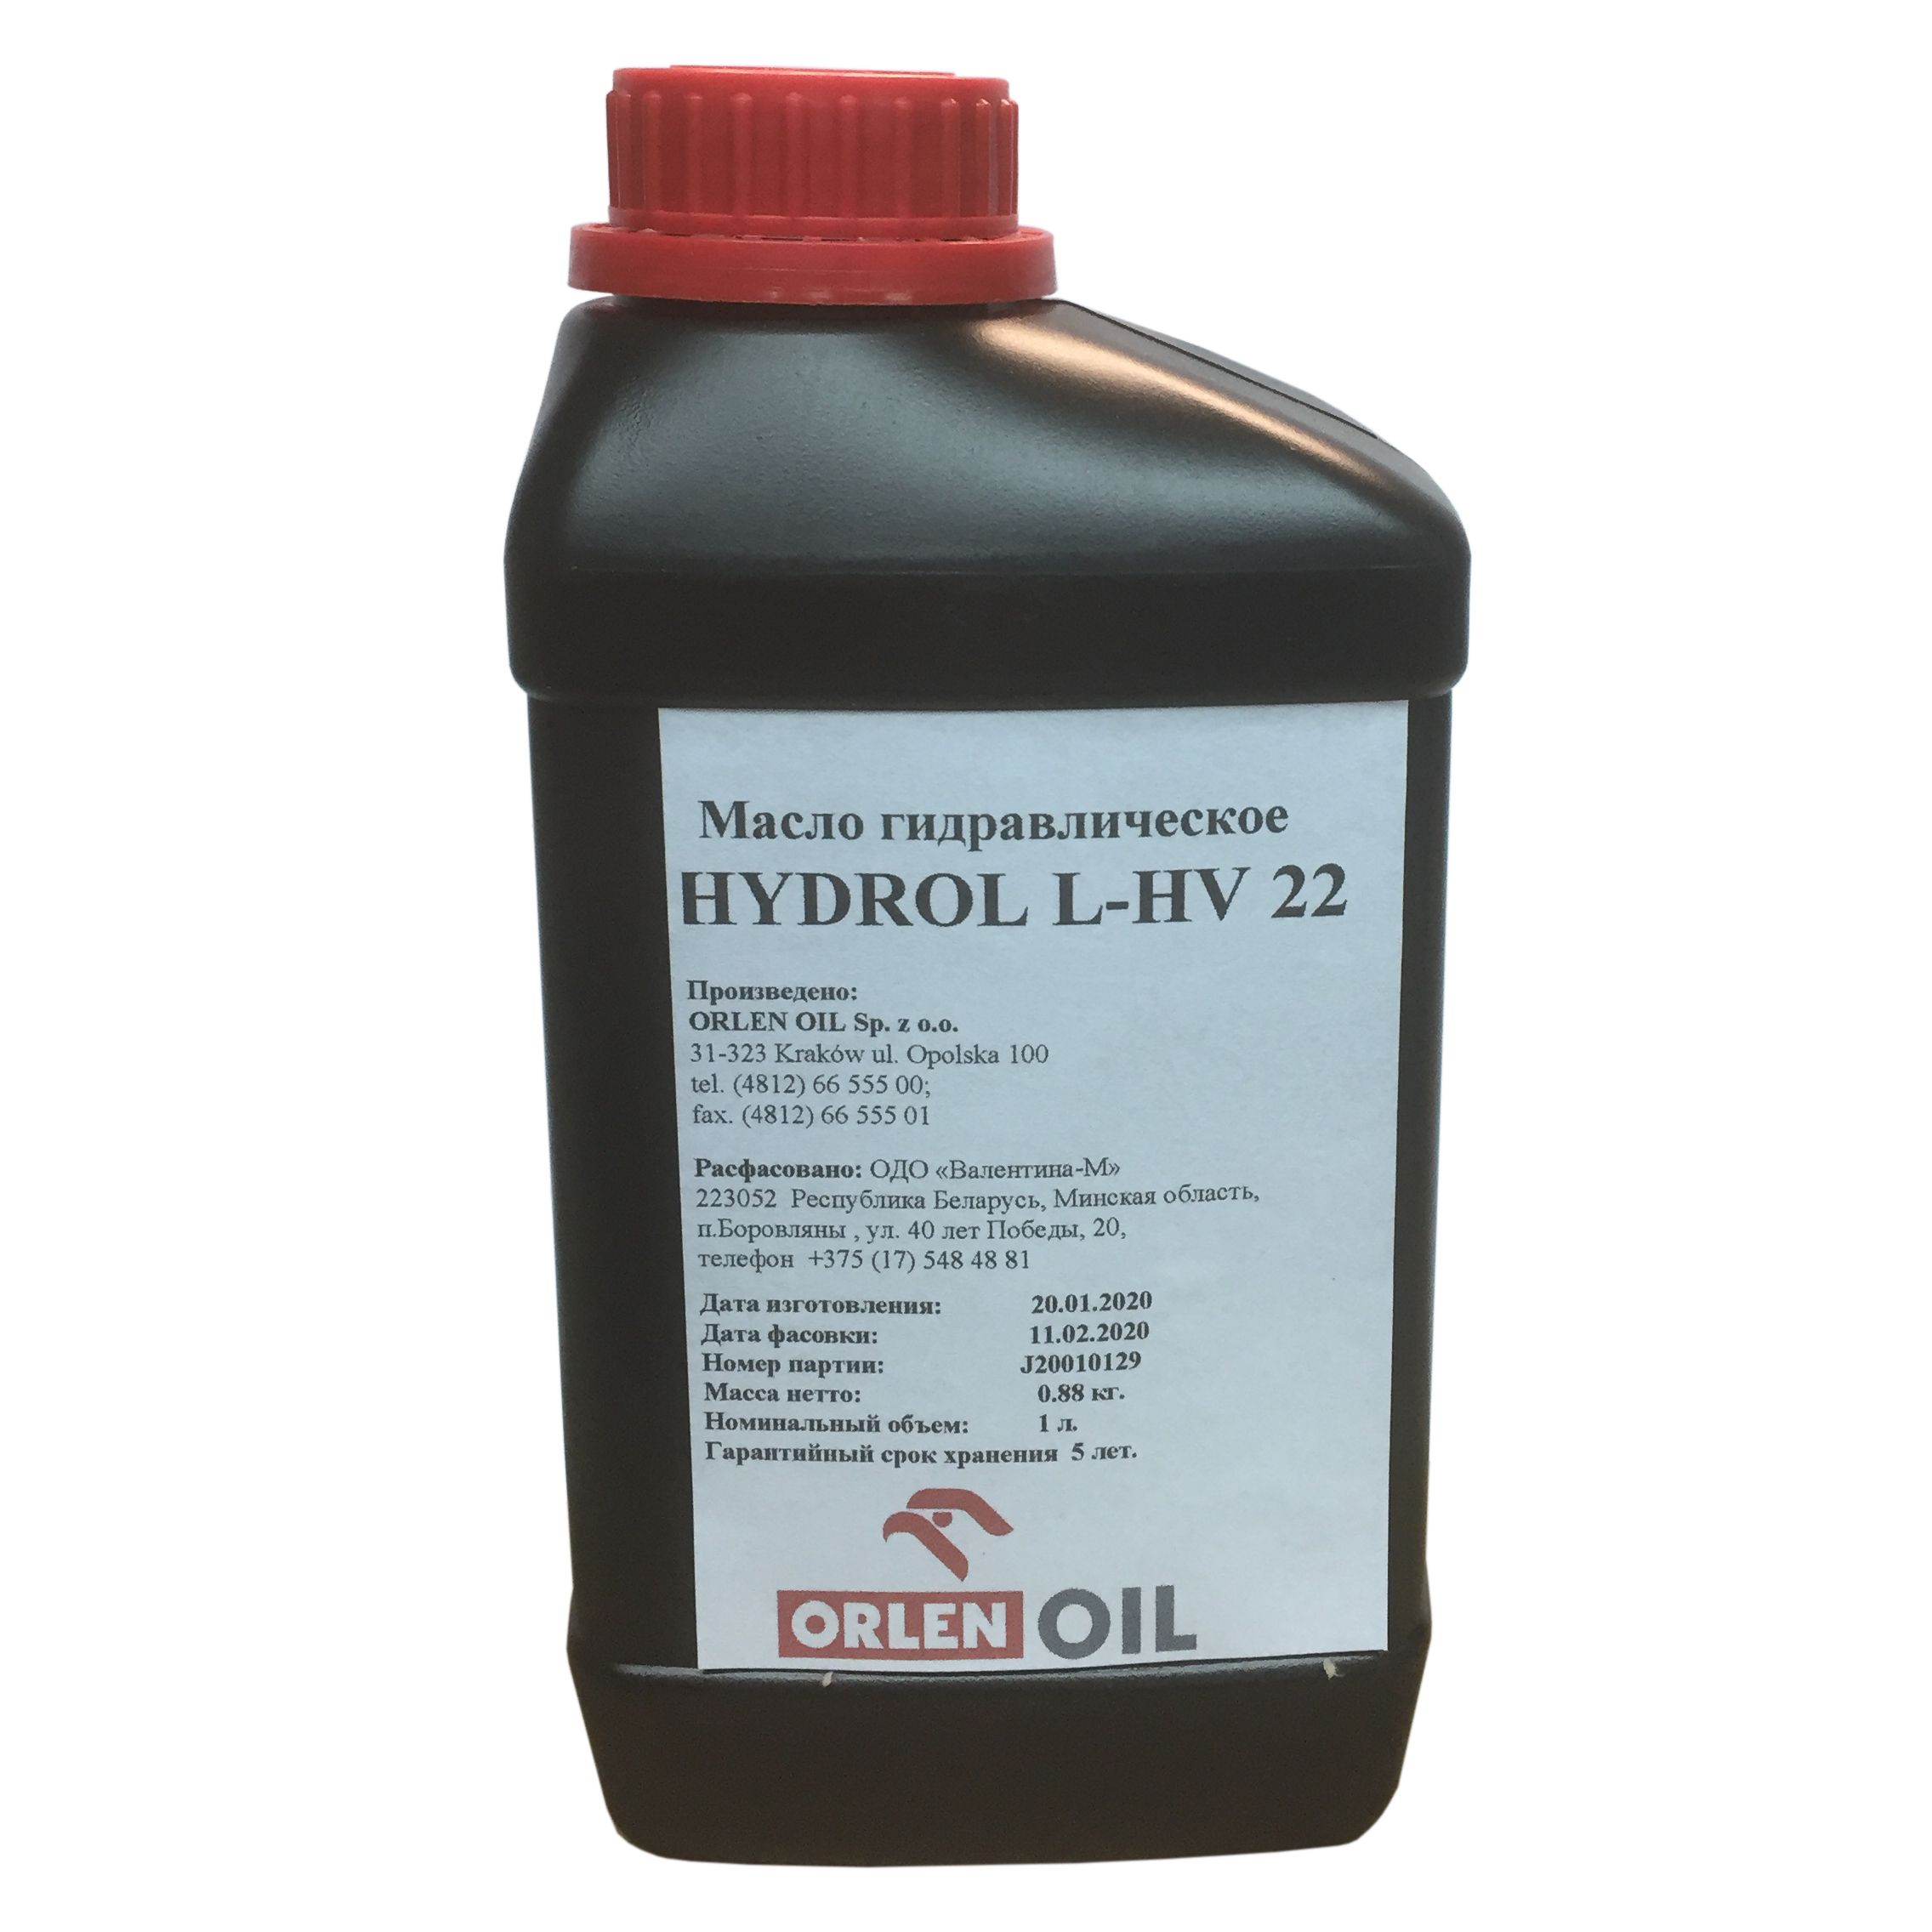 Масло гидравлическое  HYDROL L-HV 22 (1л)Orlen Oil 035618